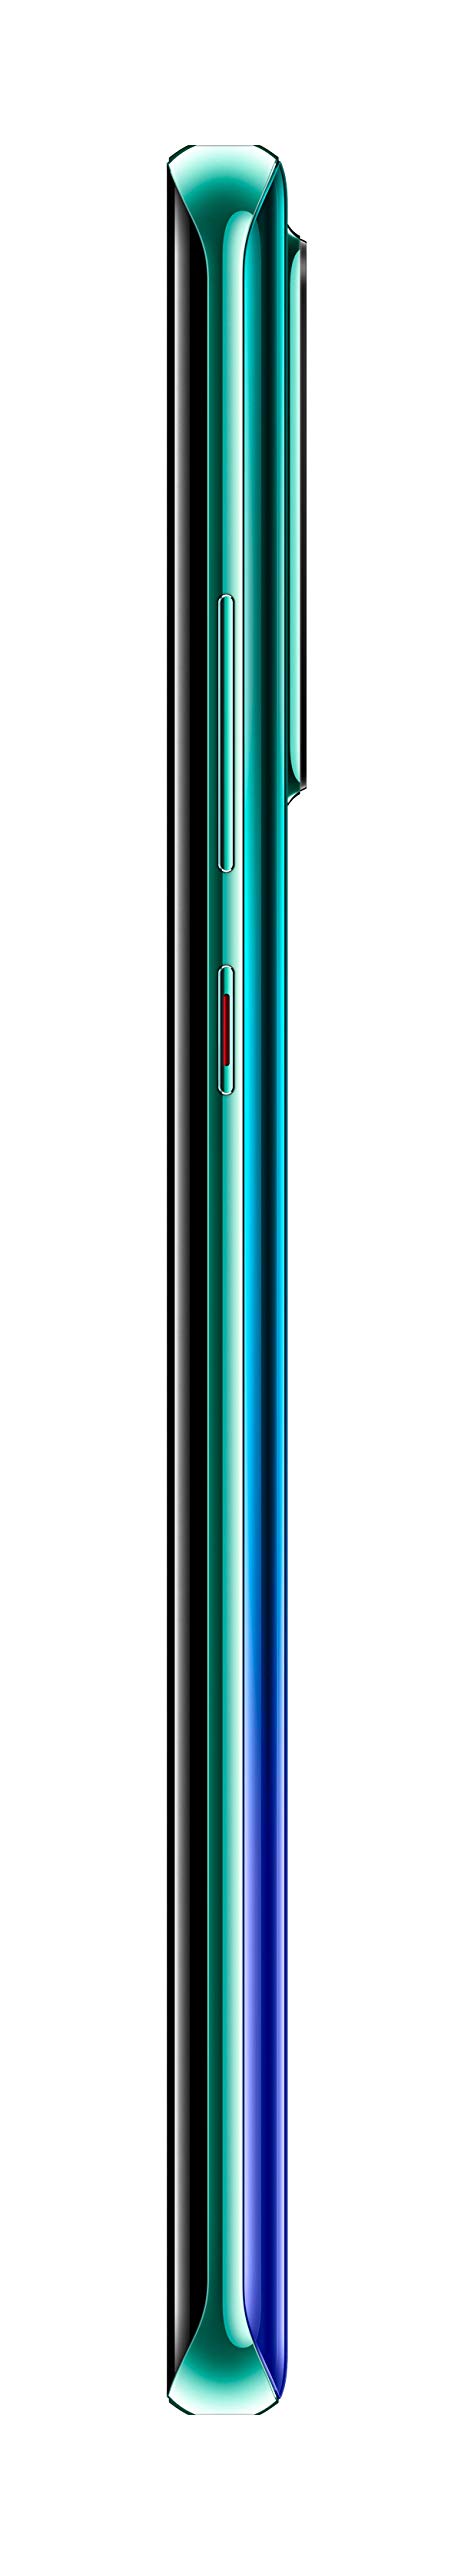 Huawei P30 Pro 256 GB Dual/Hybrid-SIM 4G Smartphone (Aurora Blue)